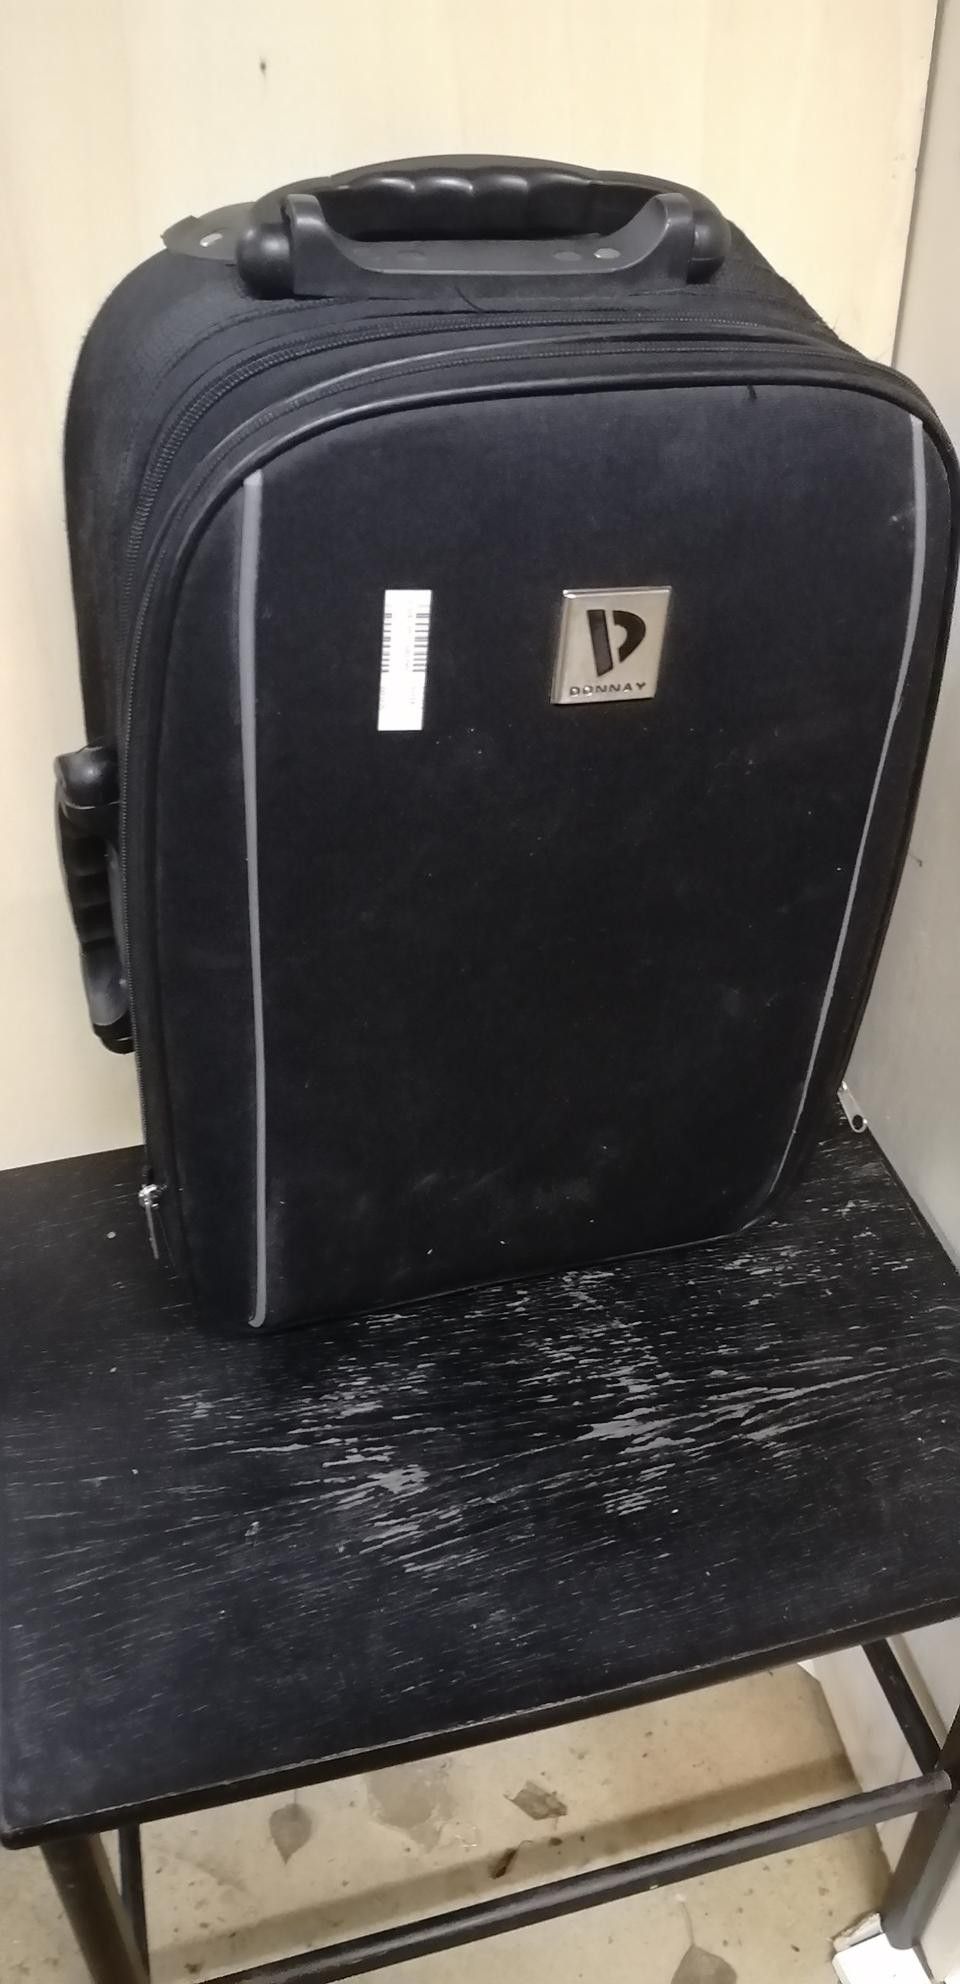 Donnay lentolaukku